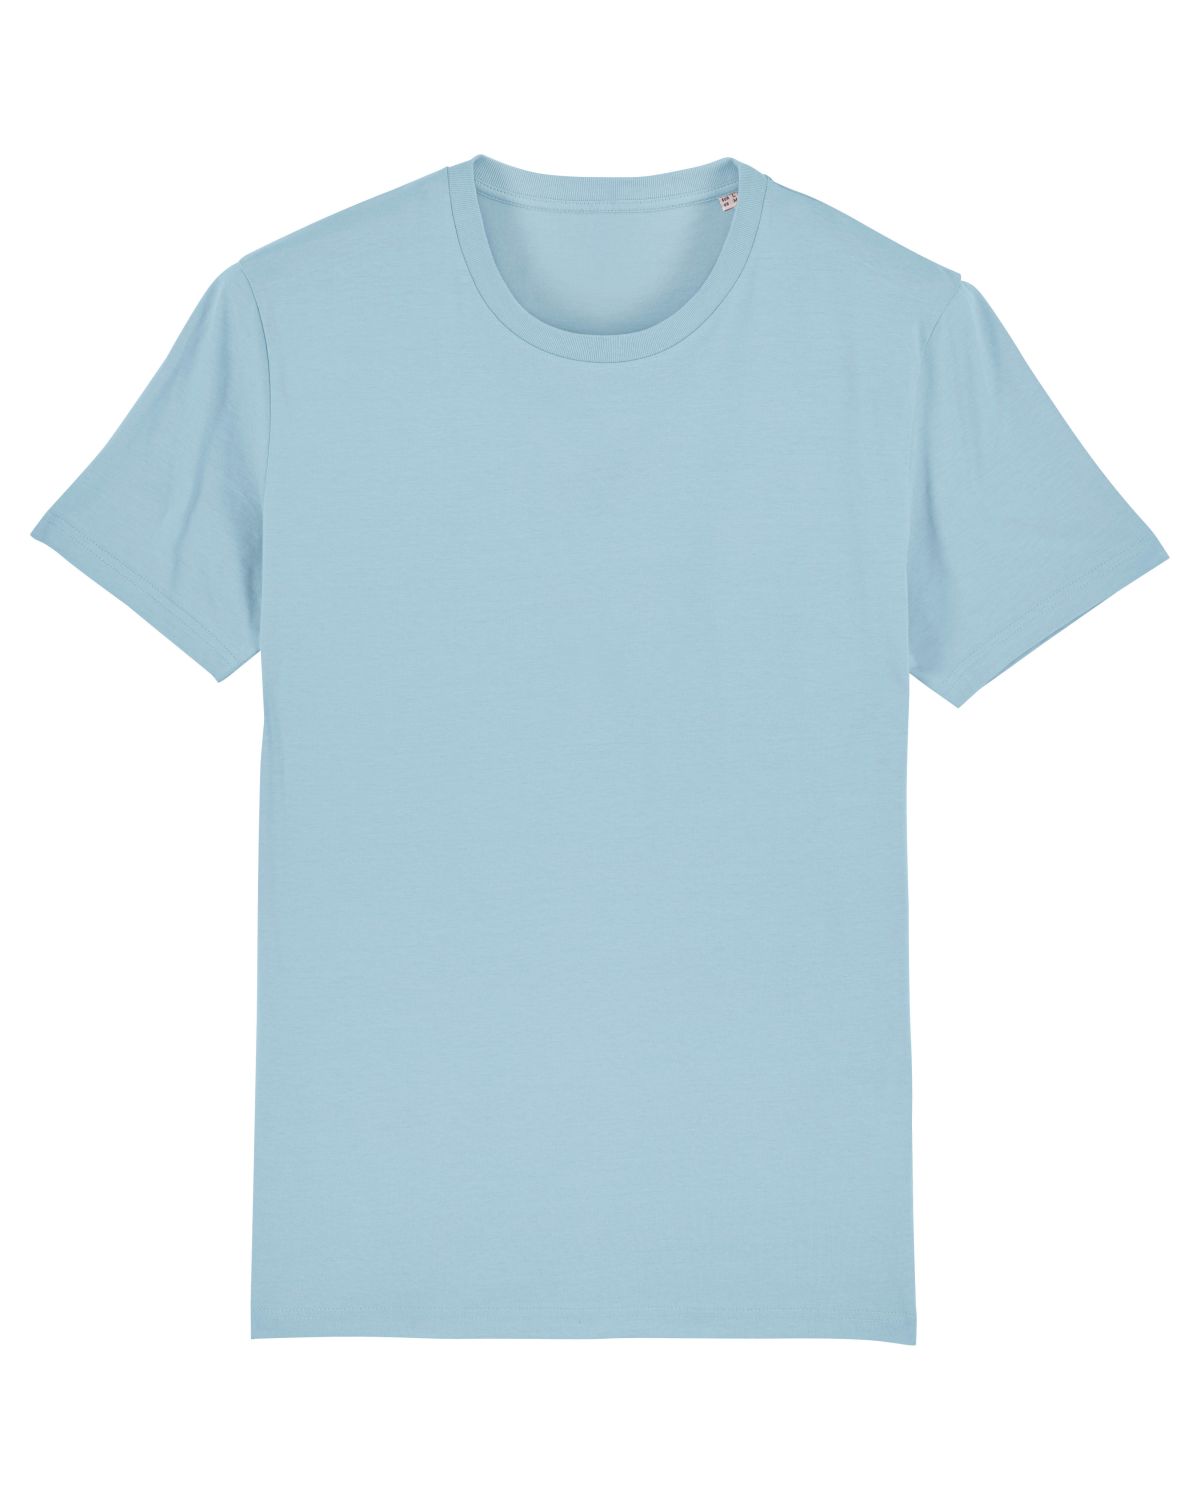 Stanley/Stella's - Creator T-shirt - Sky Blue